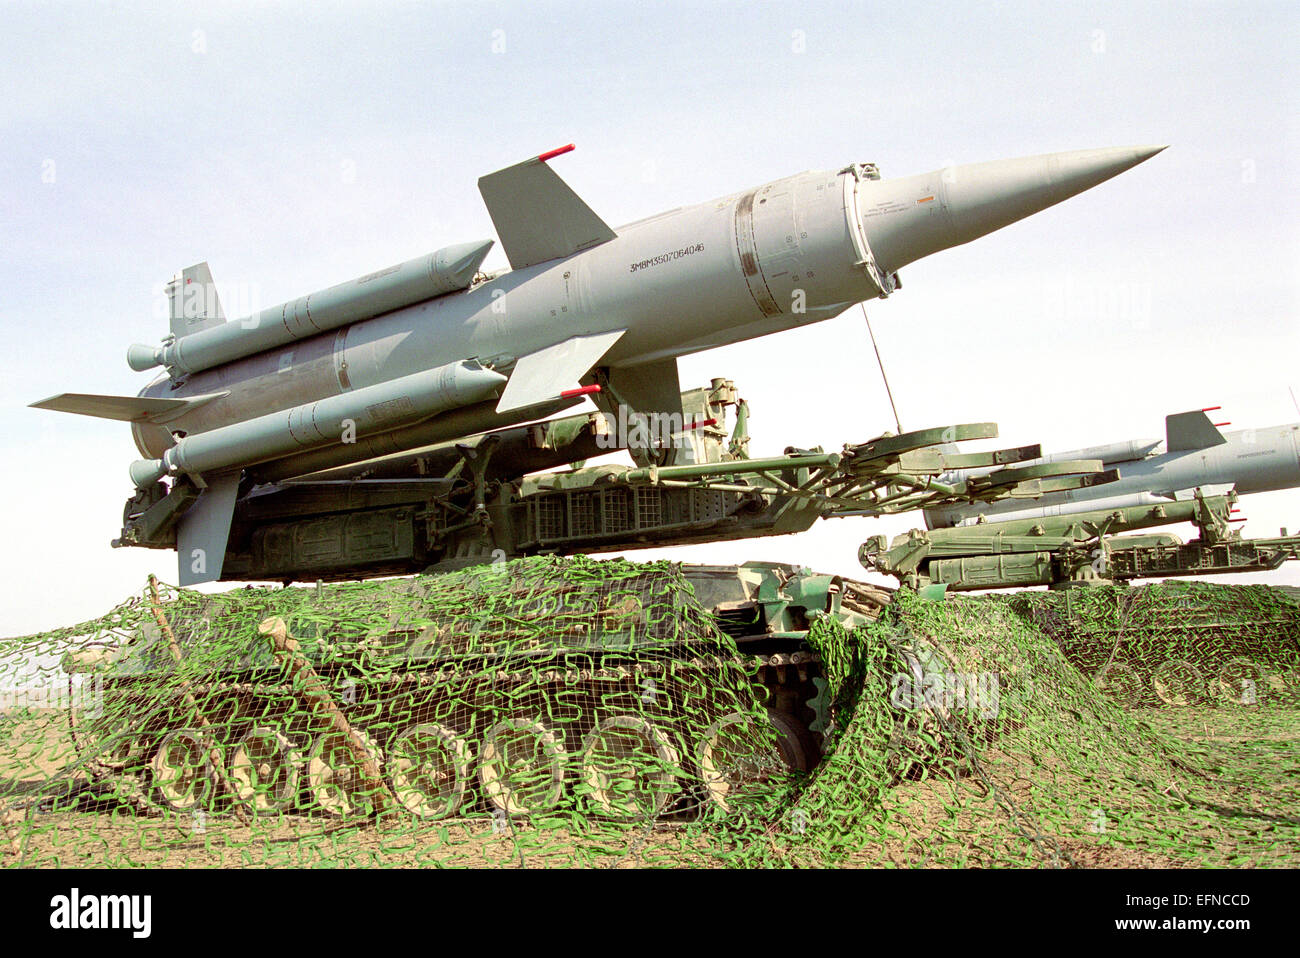 Missile air defense systems Krug (SA-4 Ganef) on the launcher. Chauda, Crimea. 1999. Stock Photo